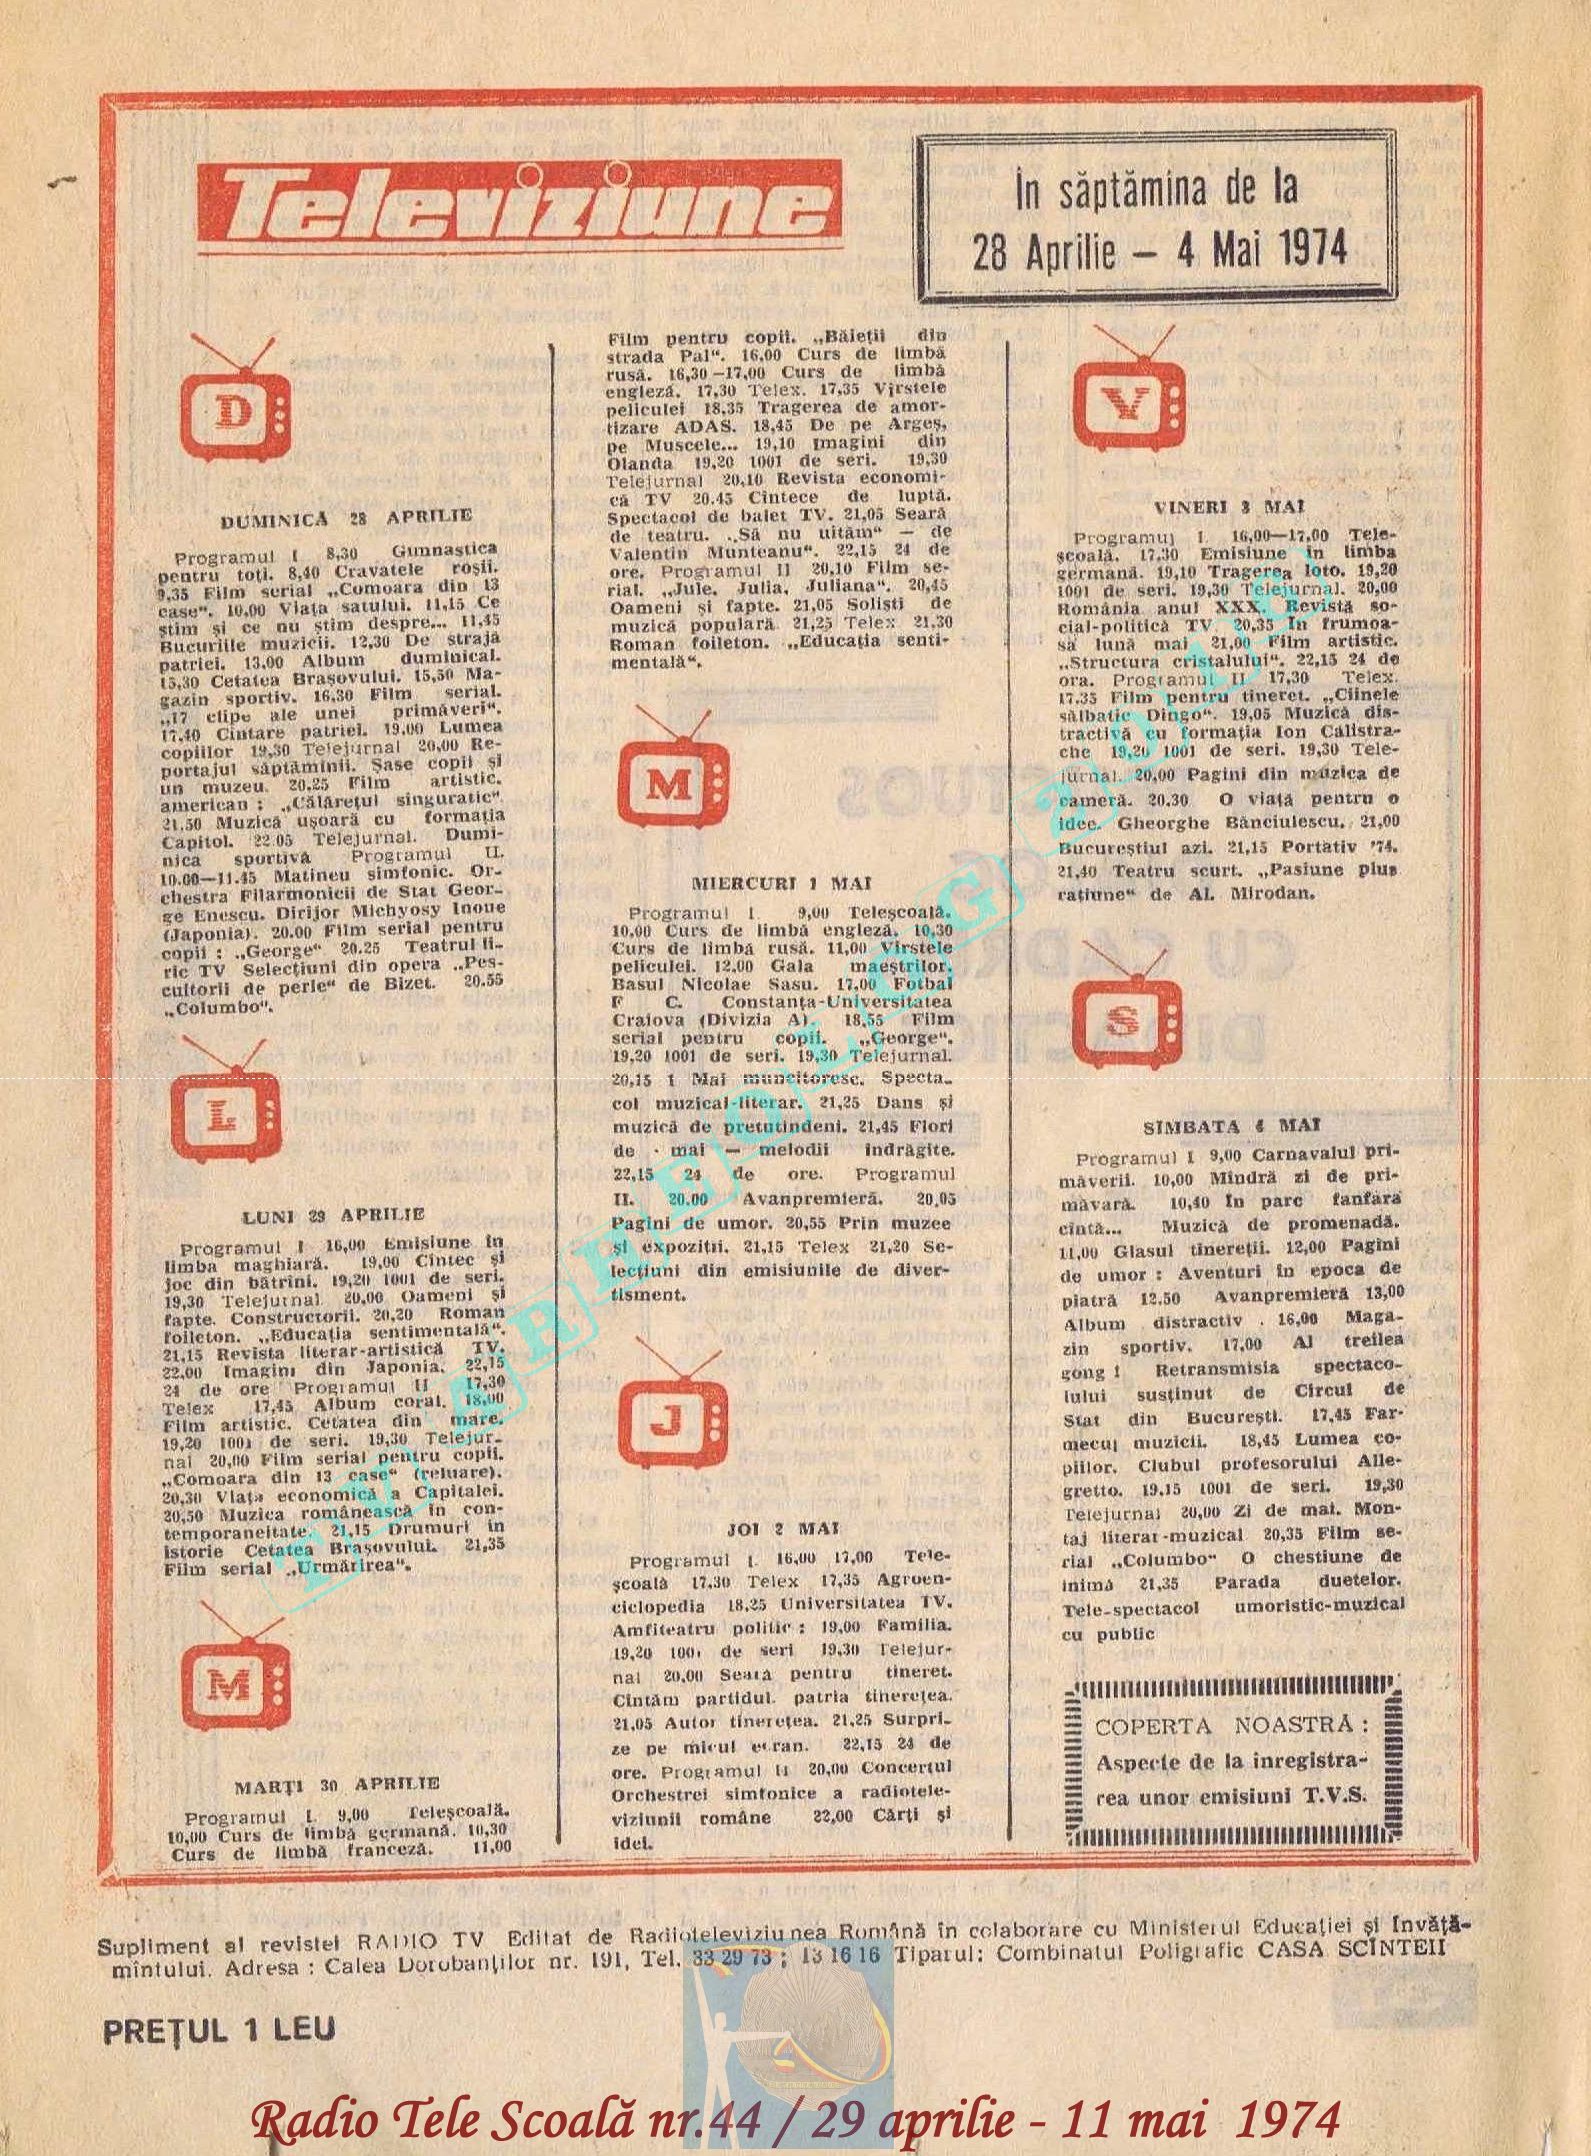 Radio Tele Scoala 1974-44 32